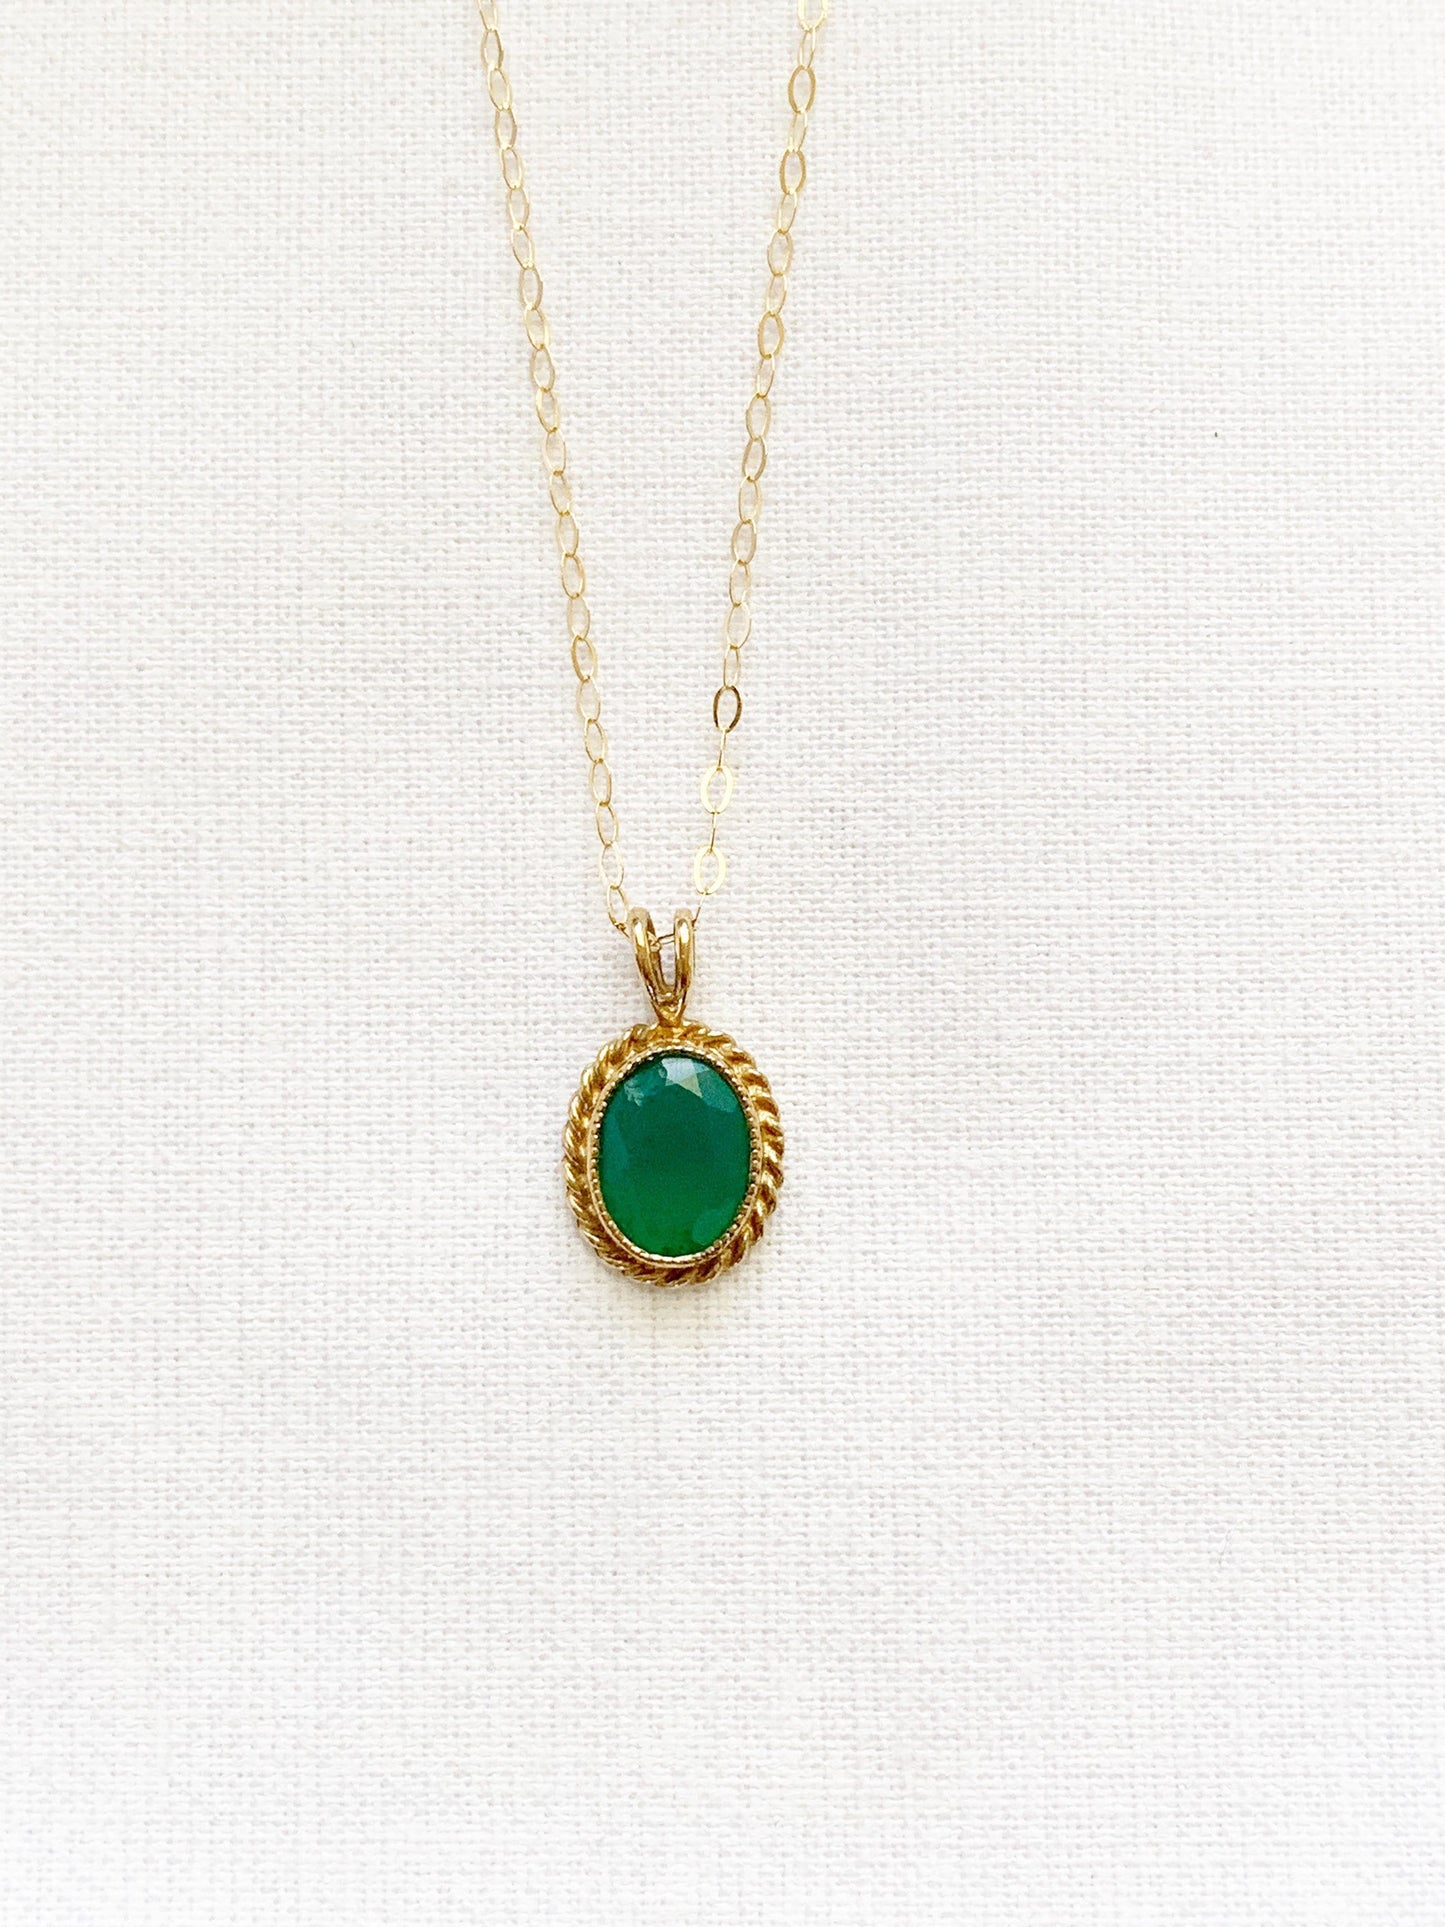 Vintage 9ct Gold Crysoprase Gemstone Necklace